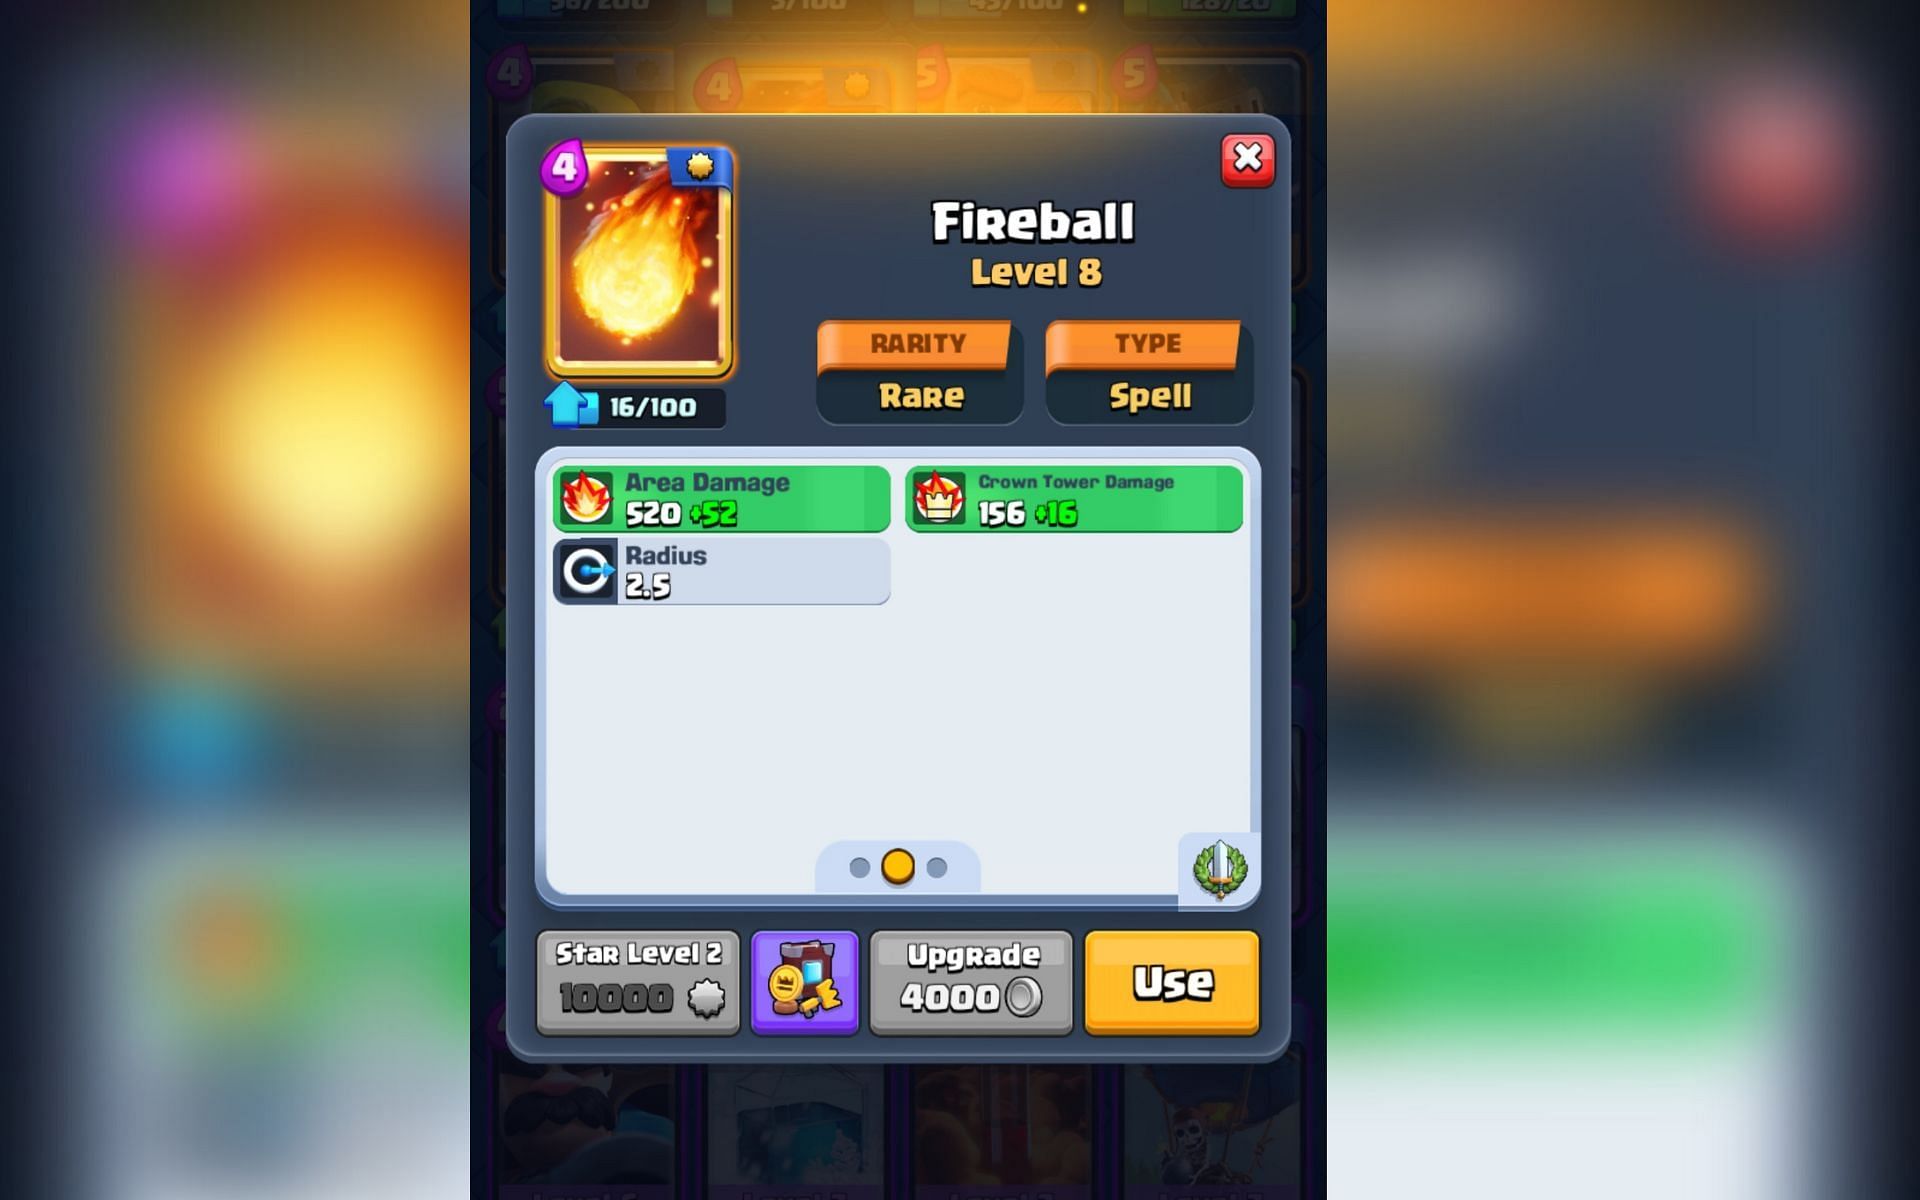 The Fireball Spell (Image via Sportskeeda)